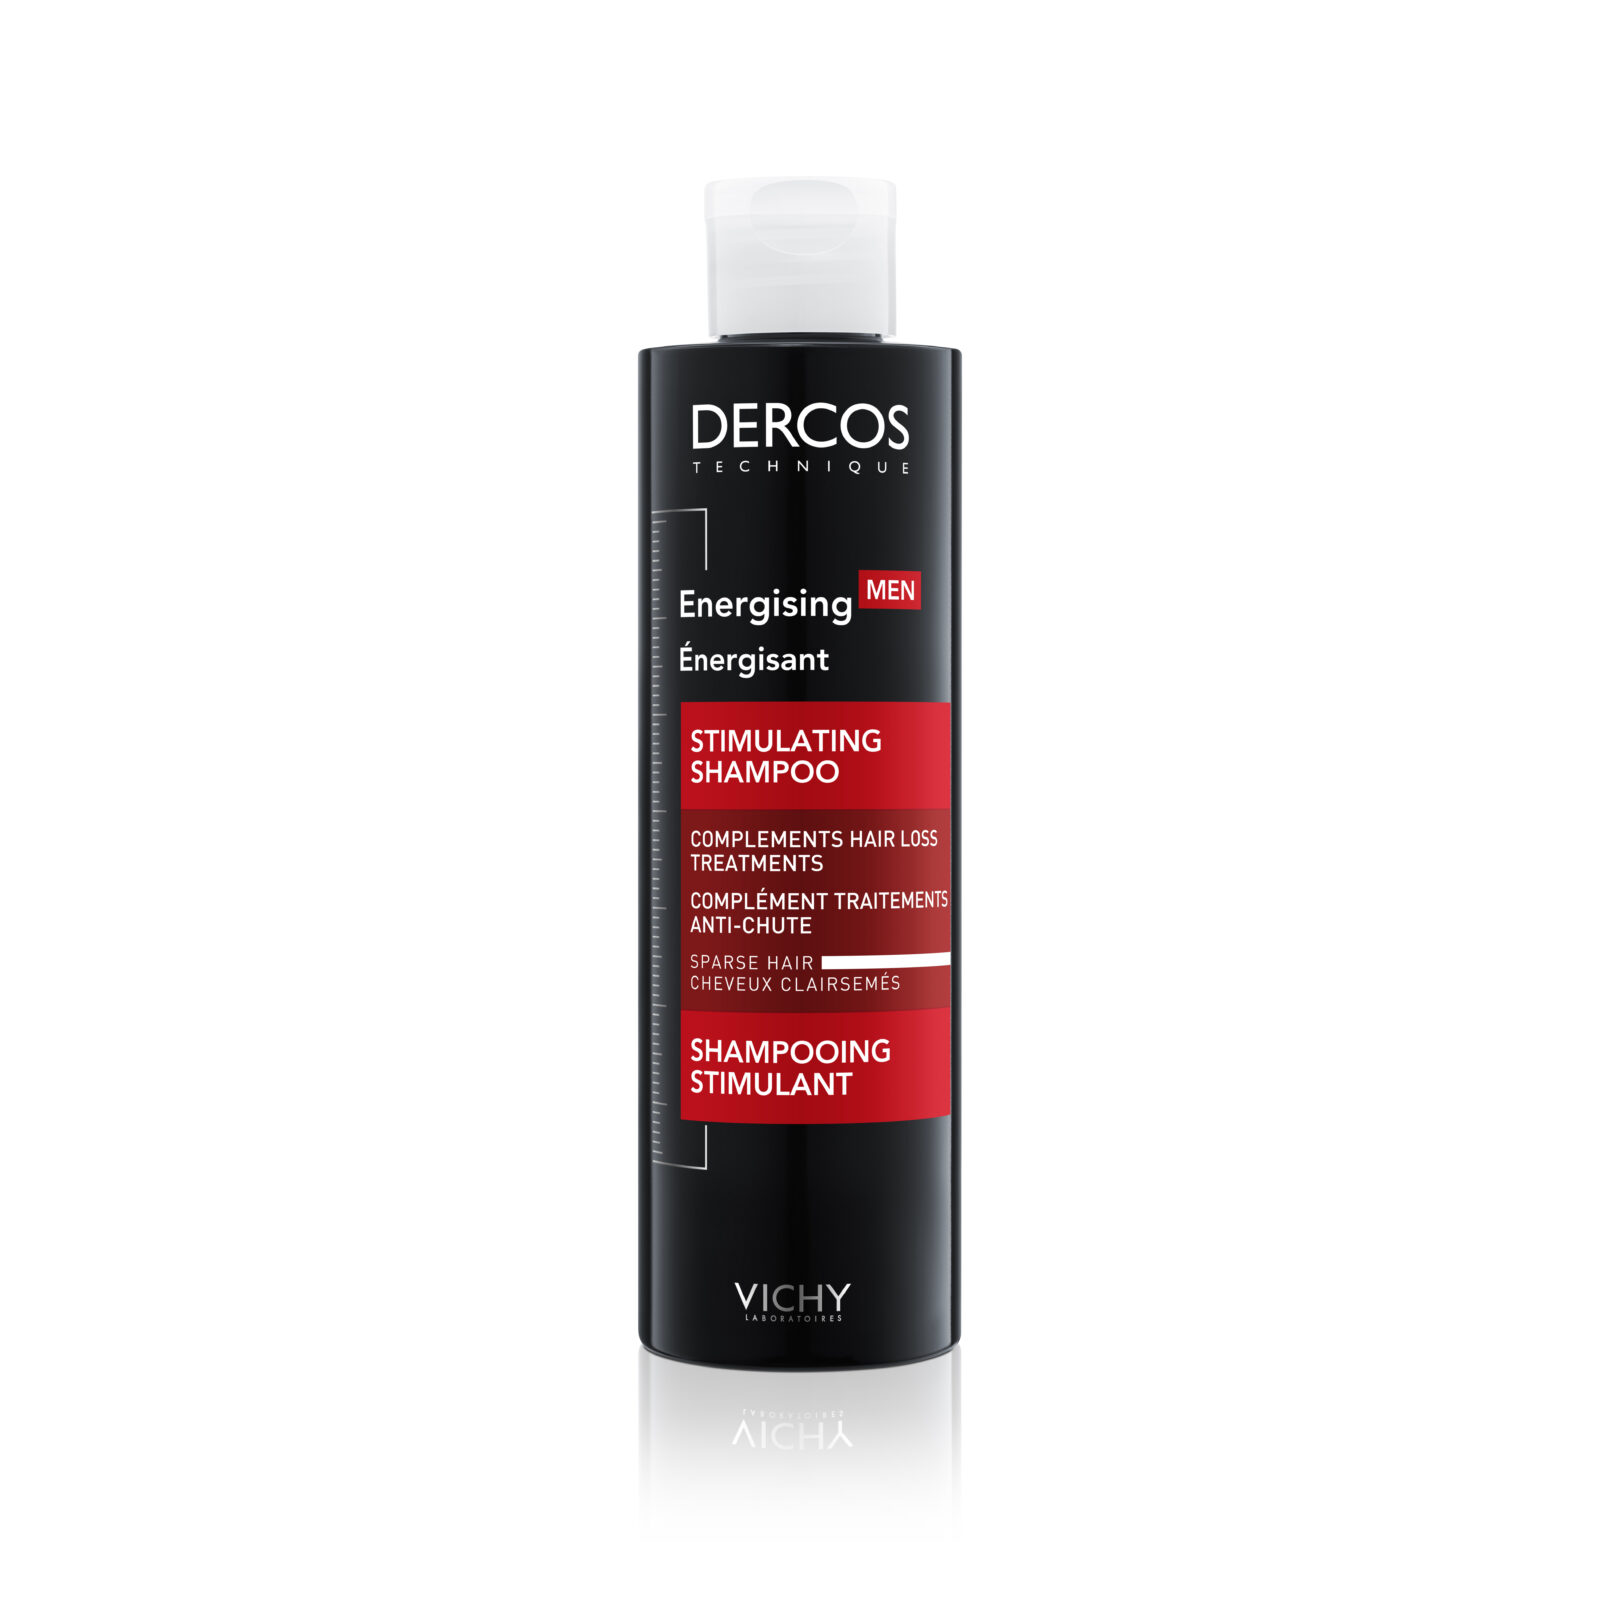 DERCOS_ENERGISING MEN - Stimulating Shampoo